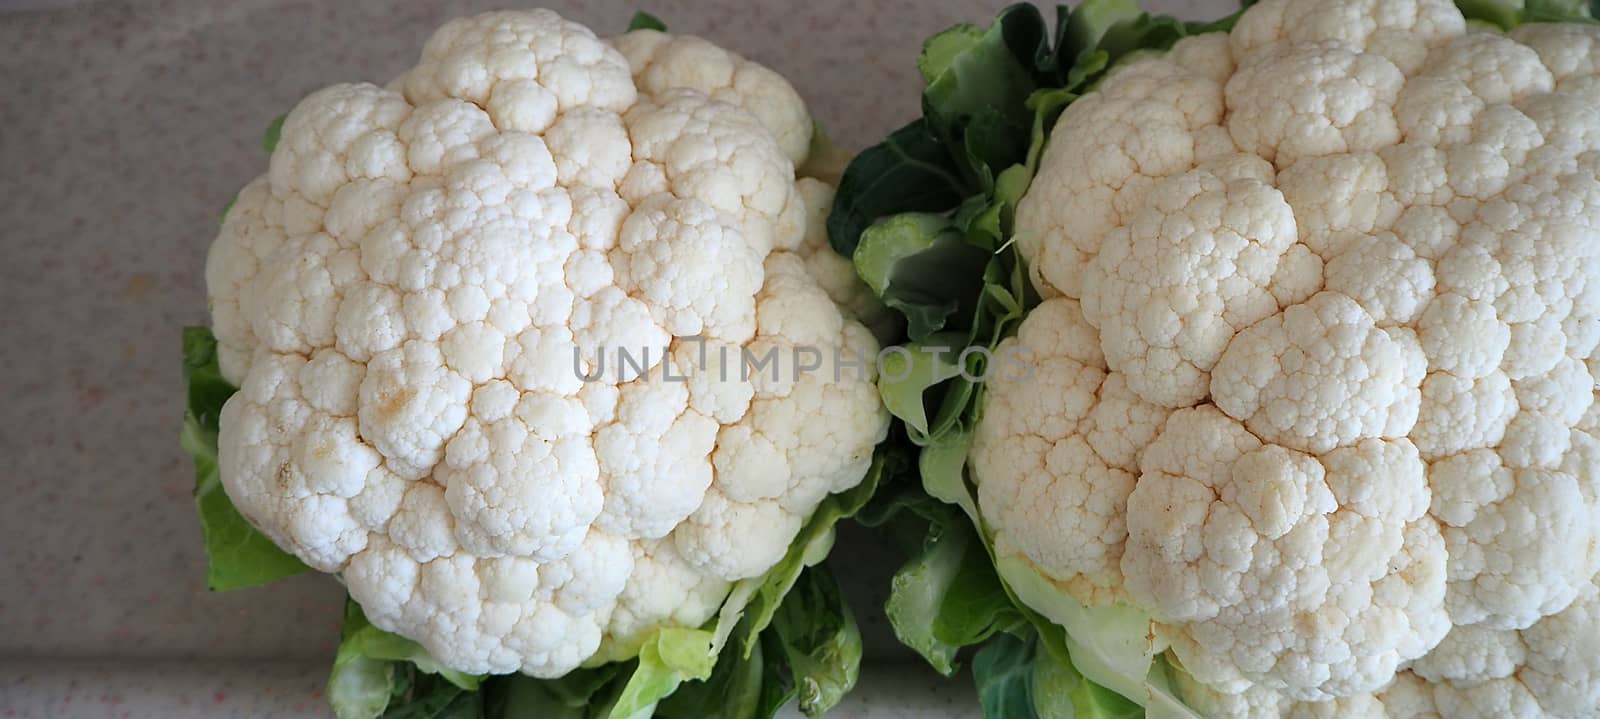 A hand touching cauliflower vegetable, close-up cauliflower, by nhatipoglu